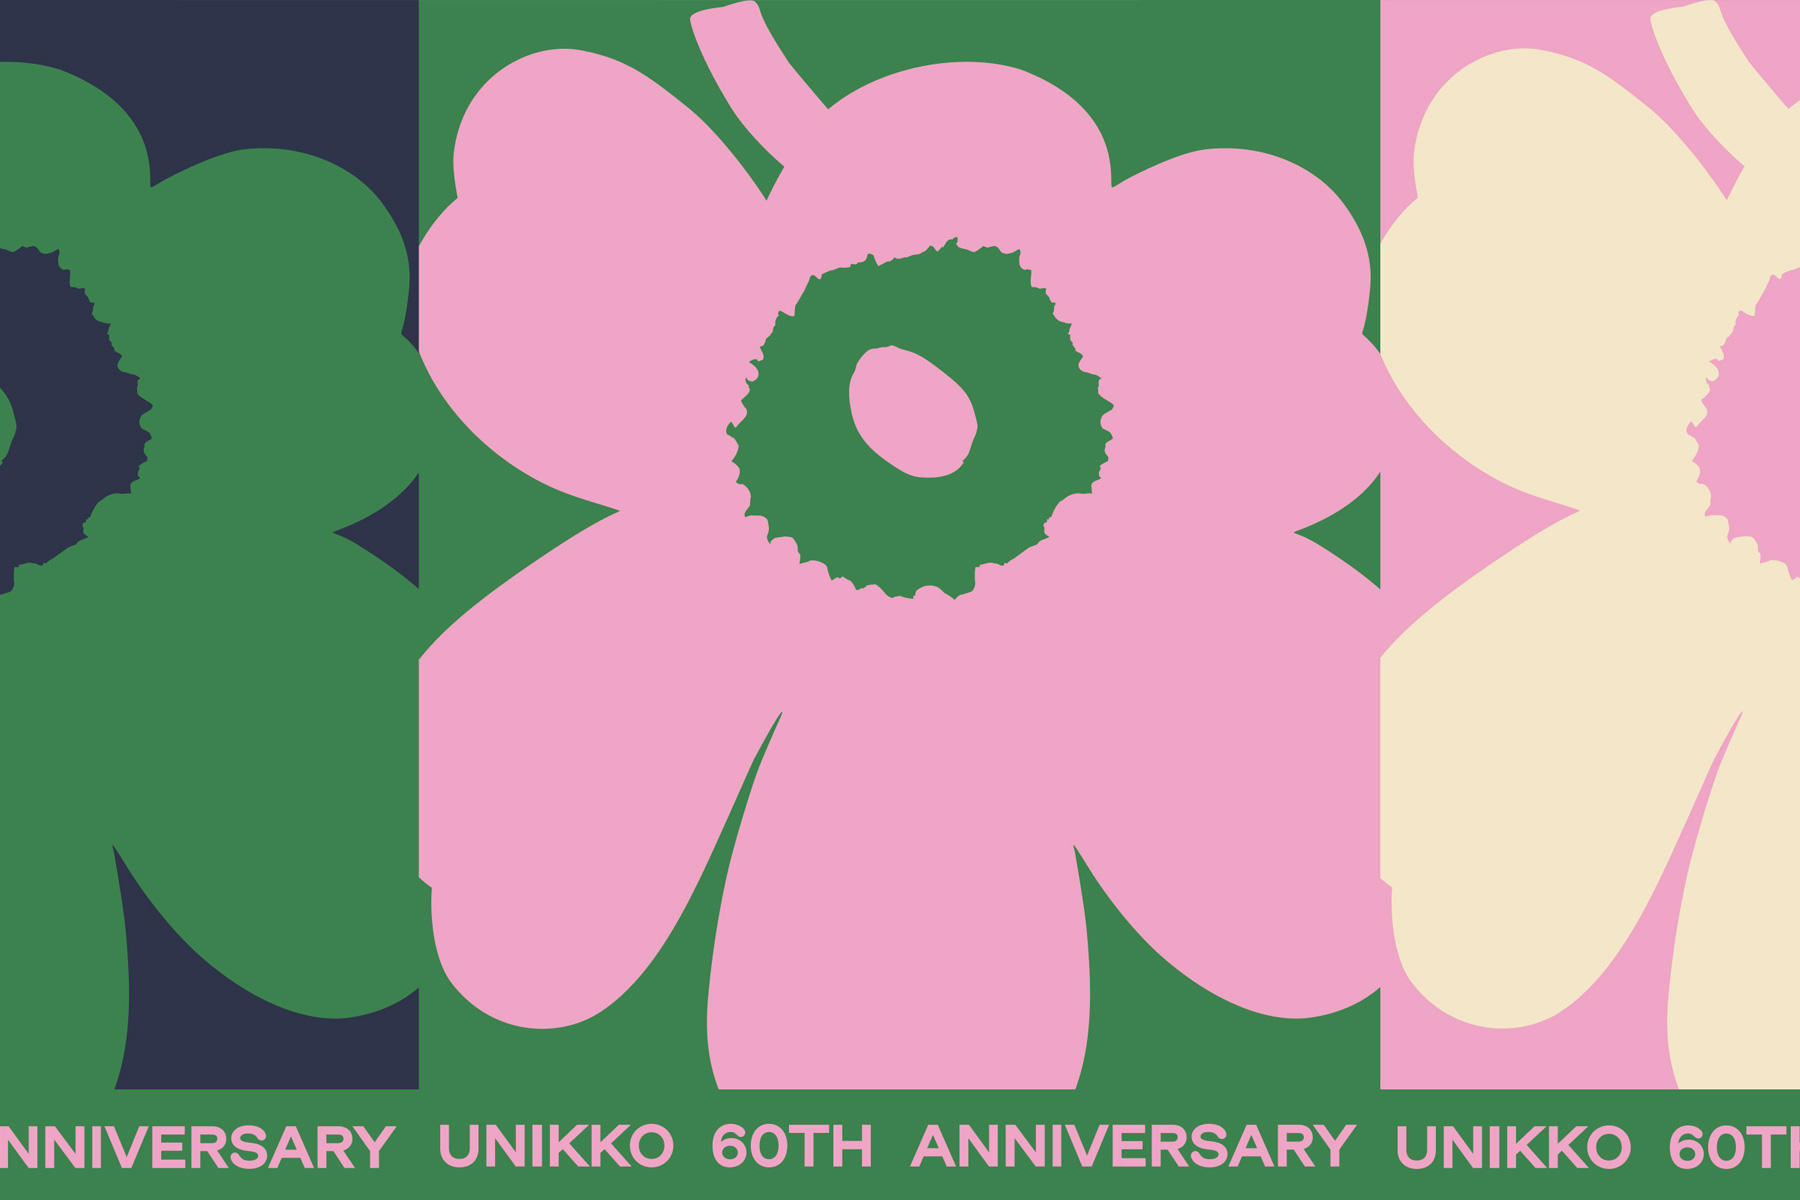 The Unikko 60th anniversary world